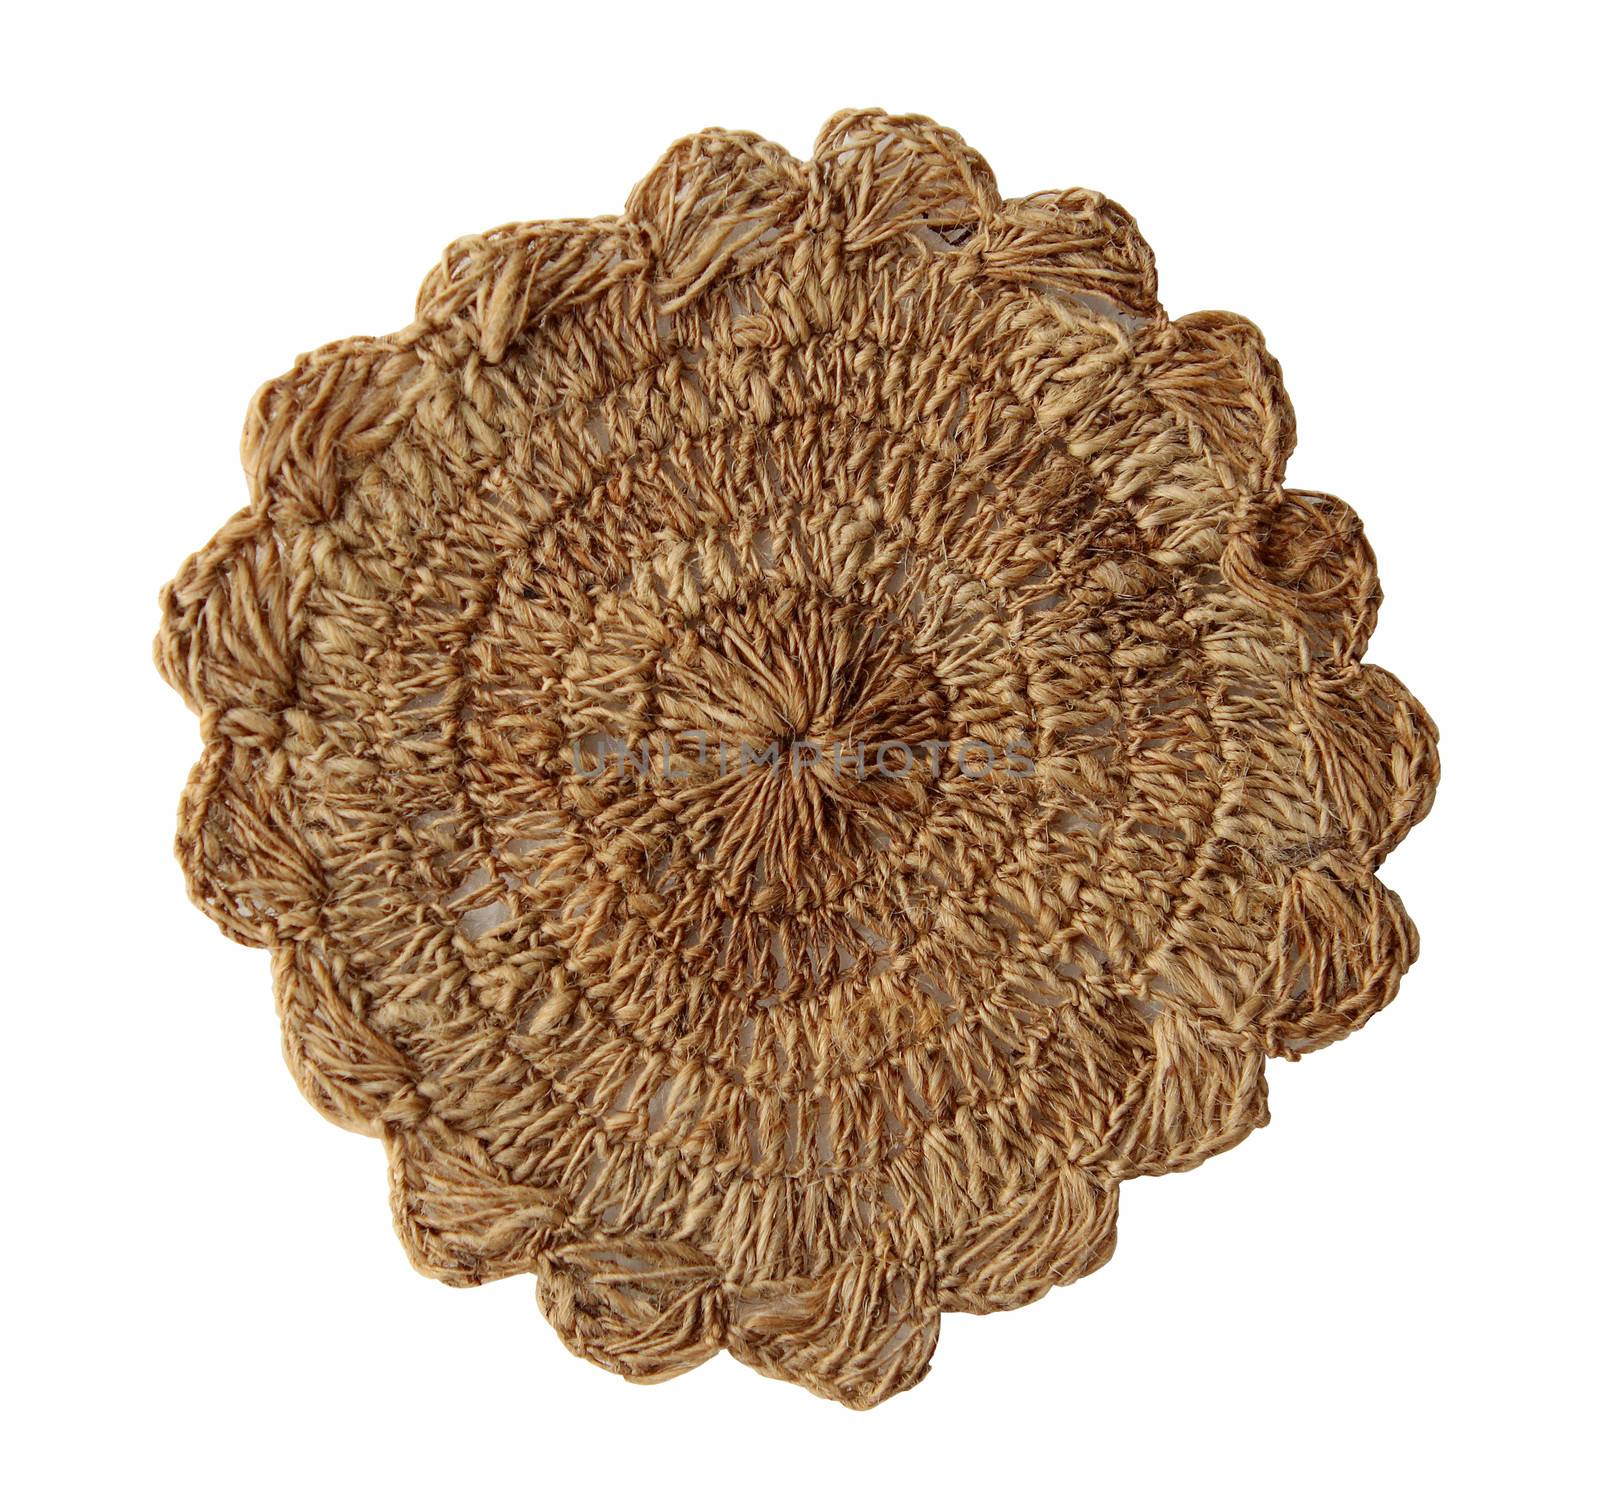 Decorative knitted cloth made of hemp handmade by cococinema